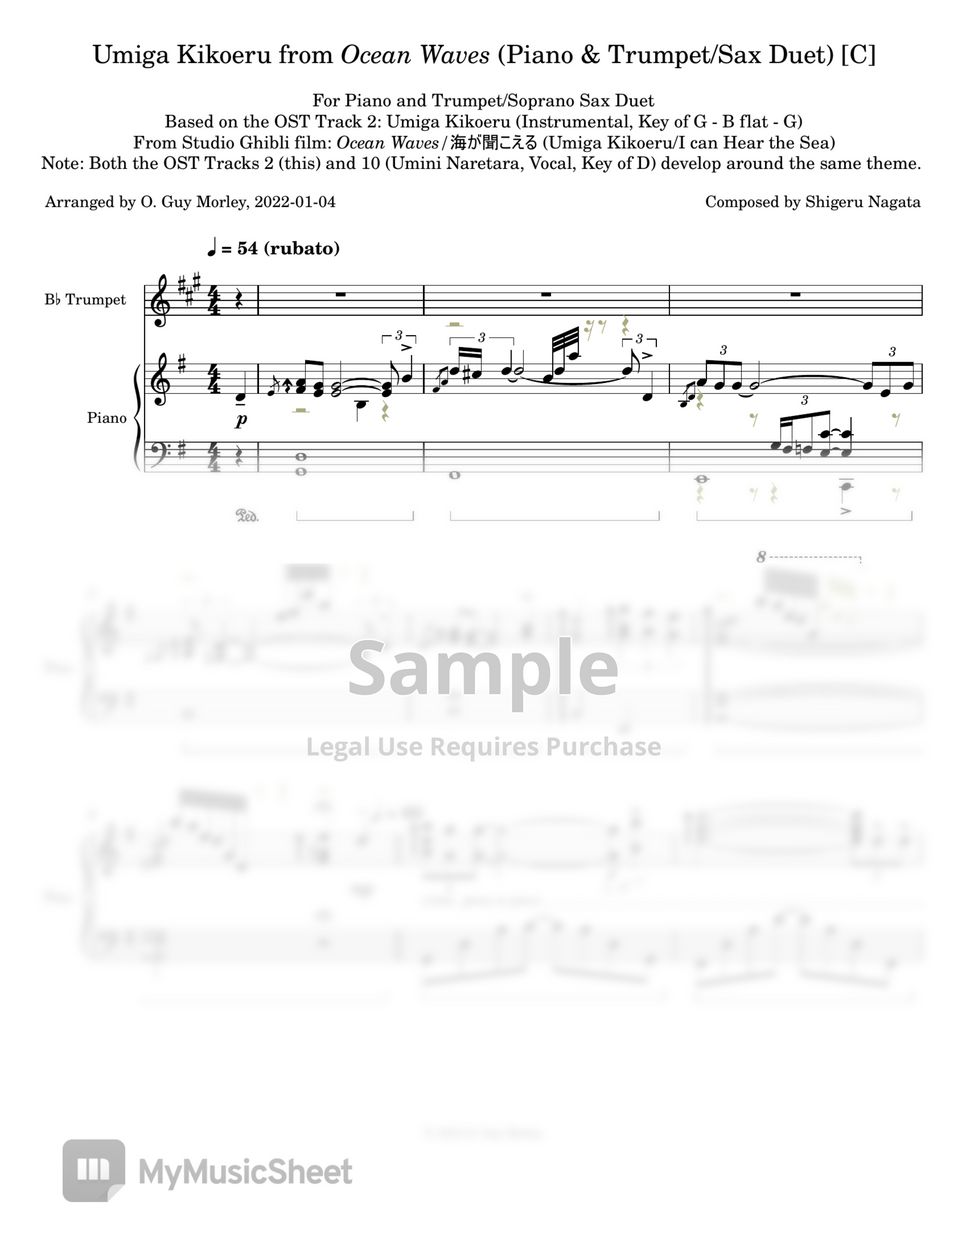 Ocean Waves/Umiga Kikoeru - Umiga Kikoeru (Duet: Trumpet + Piano) by O. Guy Morley